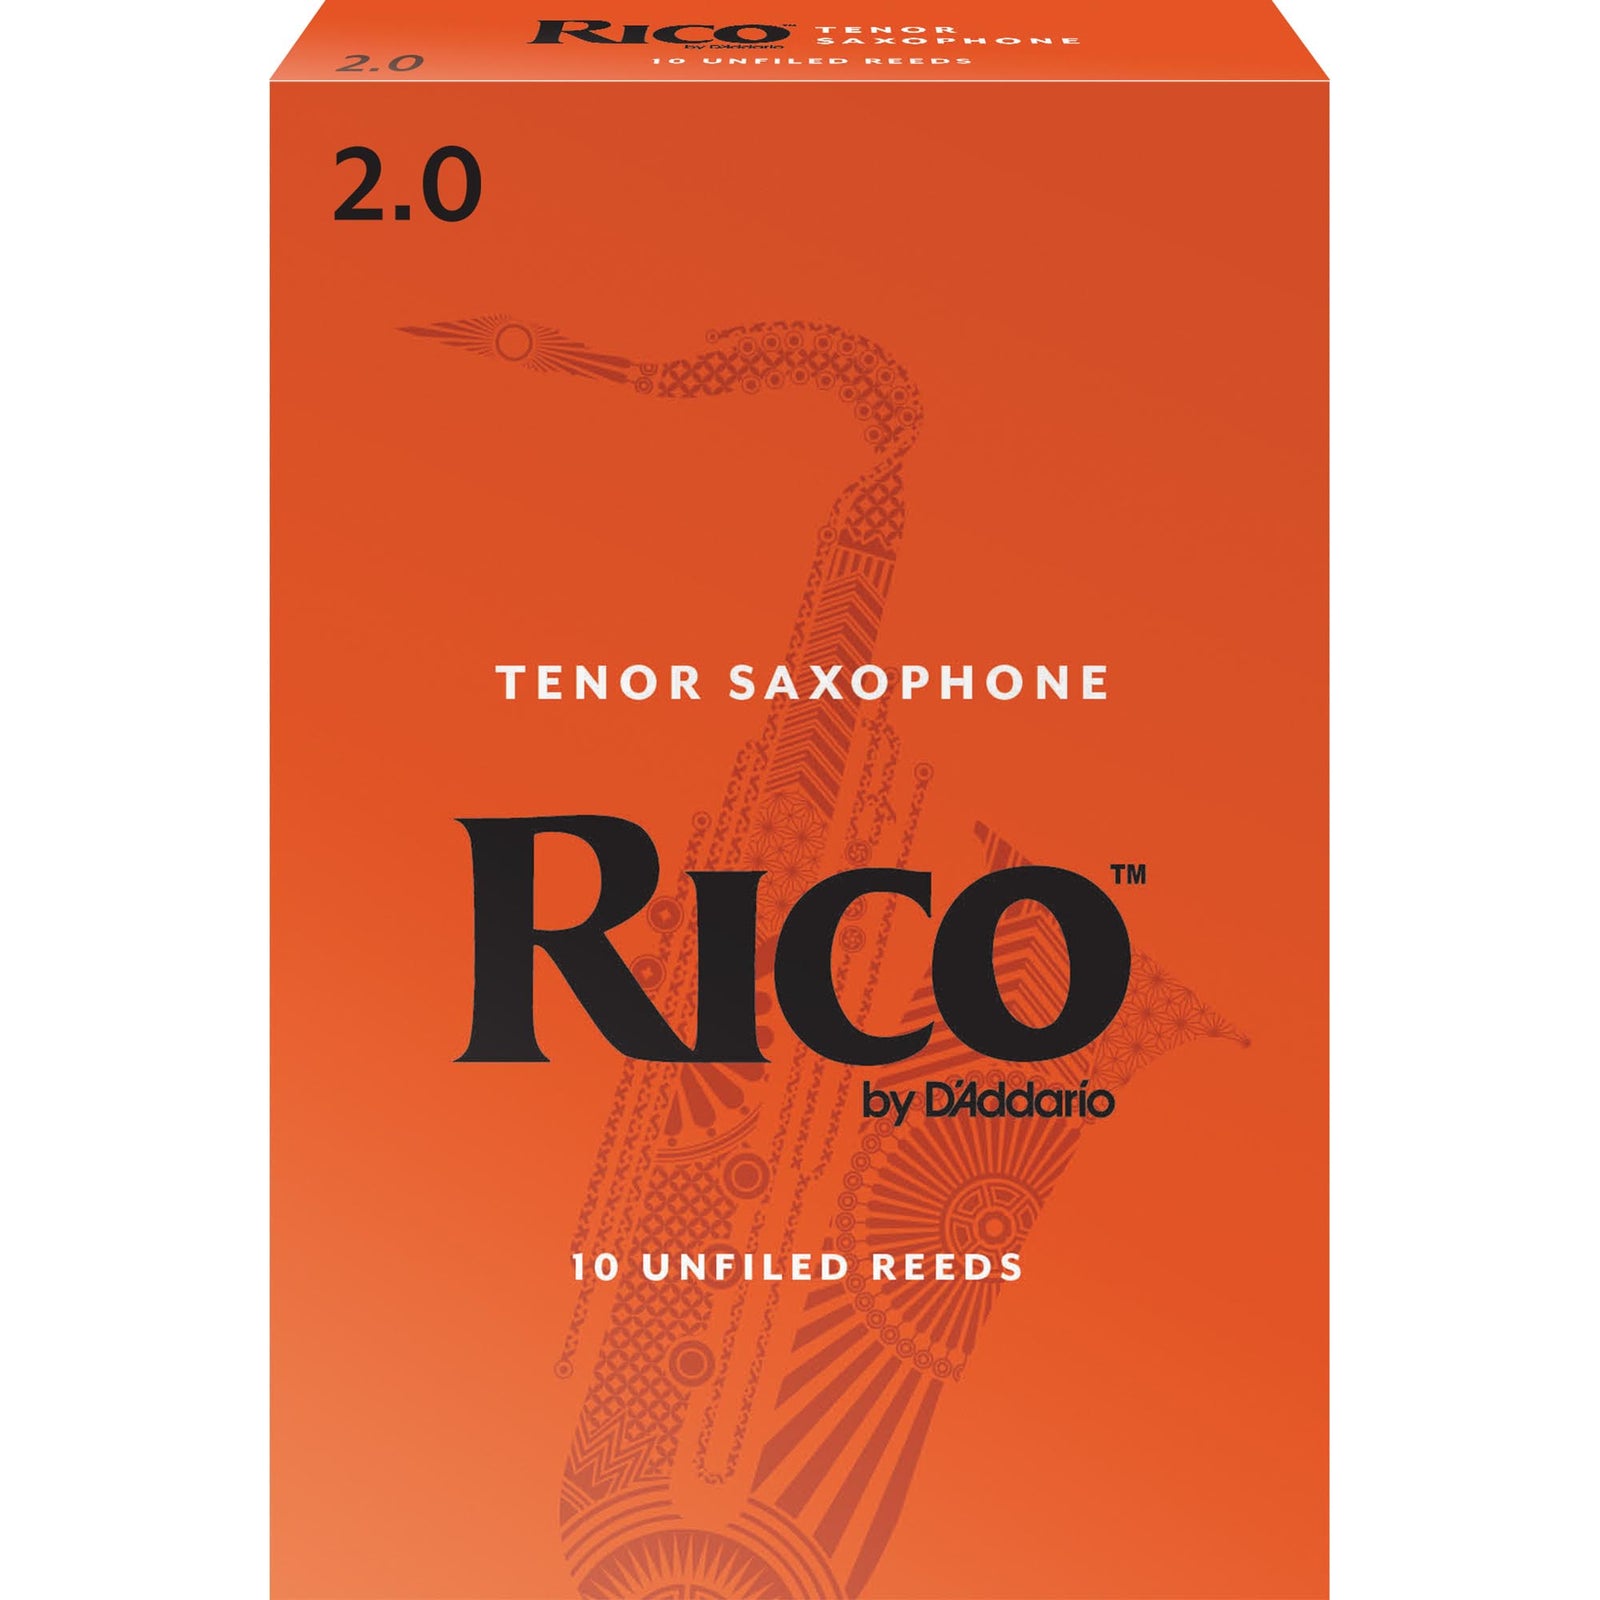 Rico by D'addario Tenor Saxophone Reeds (10 Box)